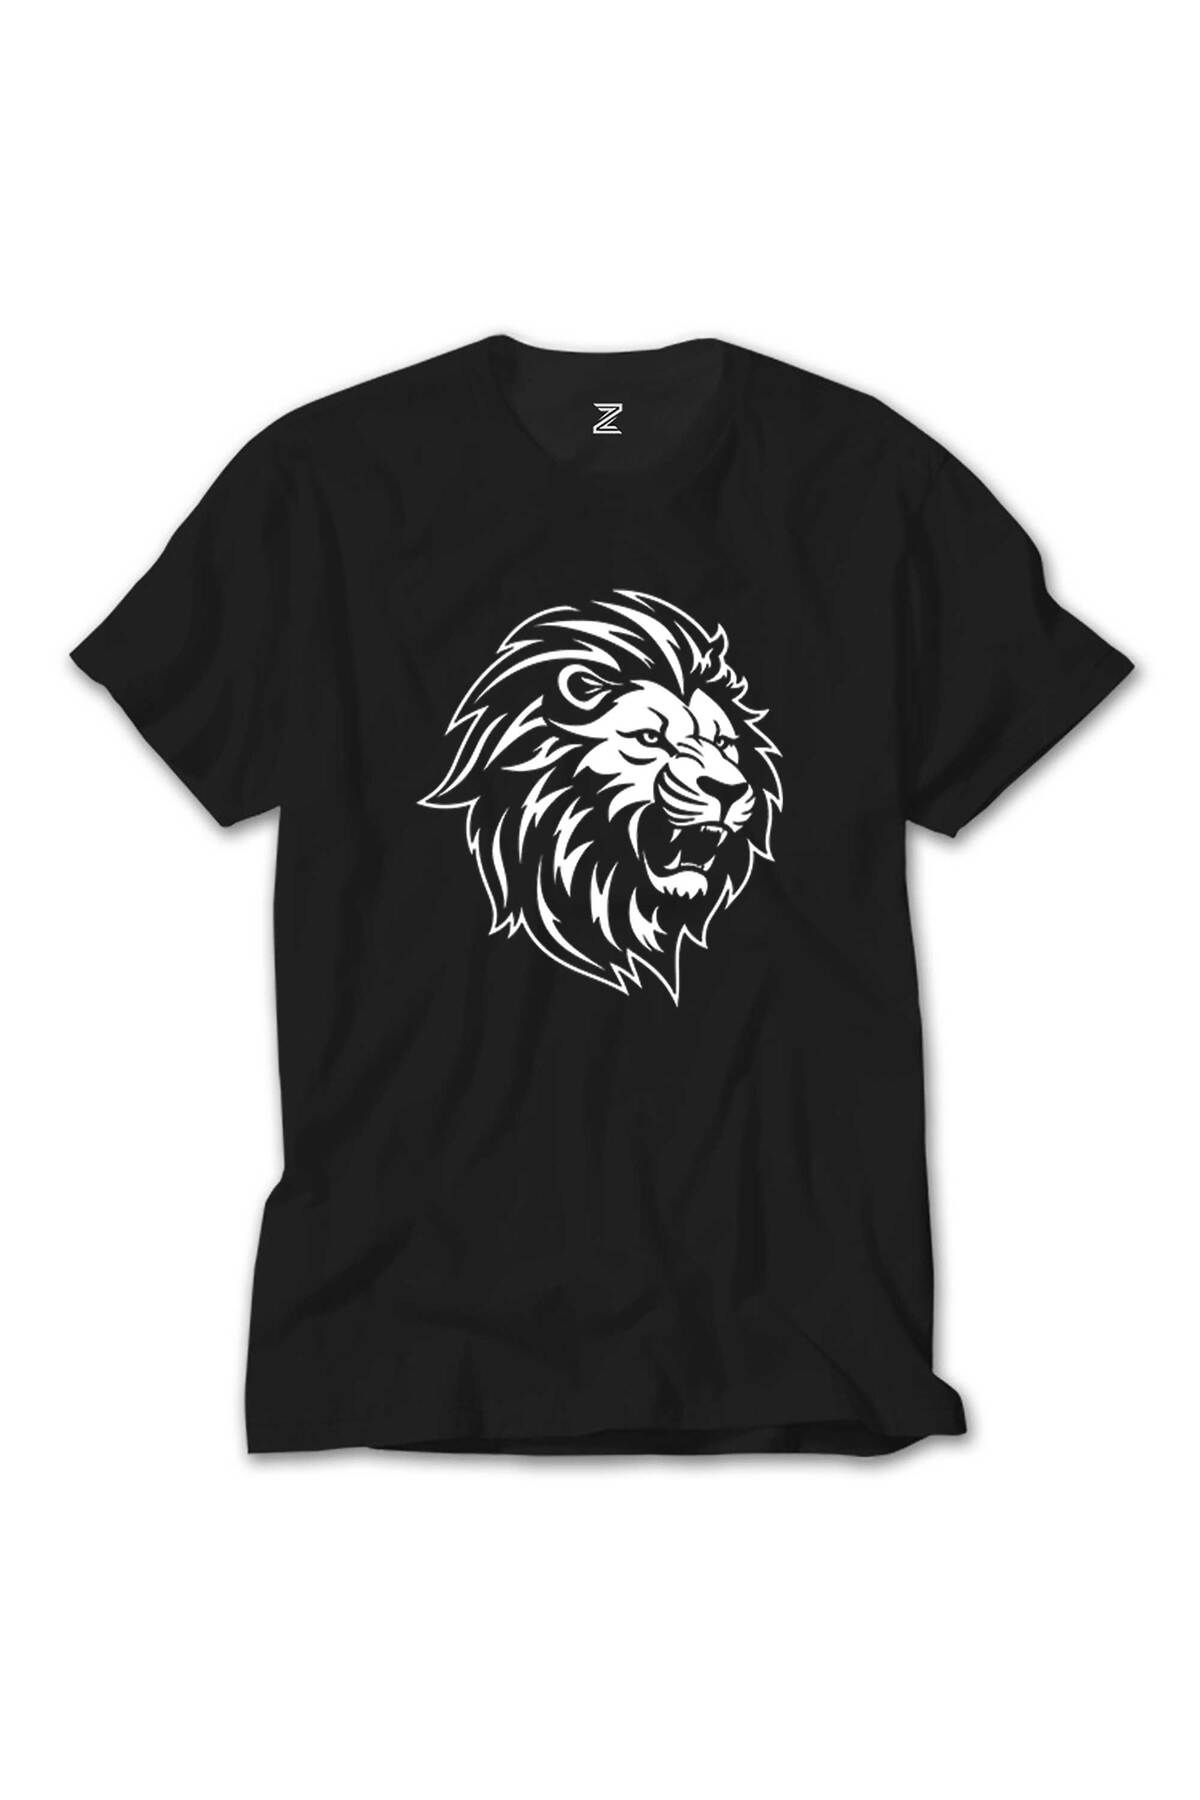 Z zepplin Black and White Lion Siyah Tişört